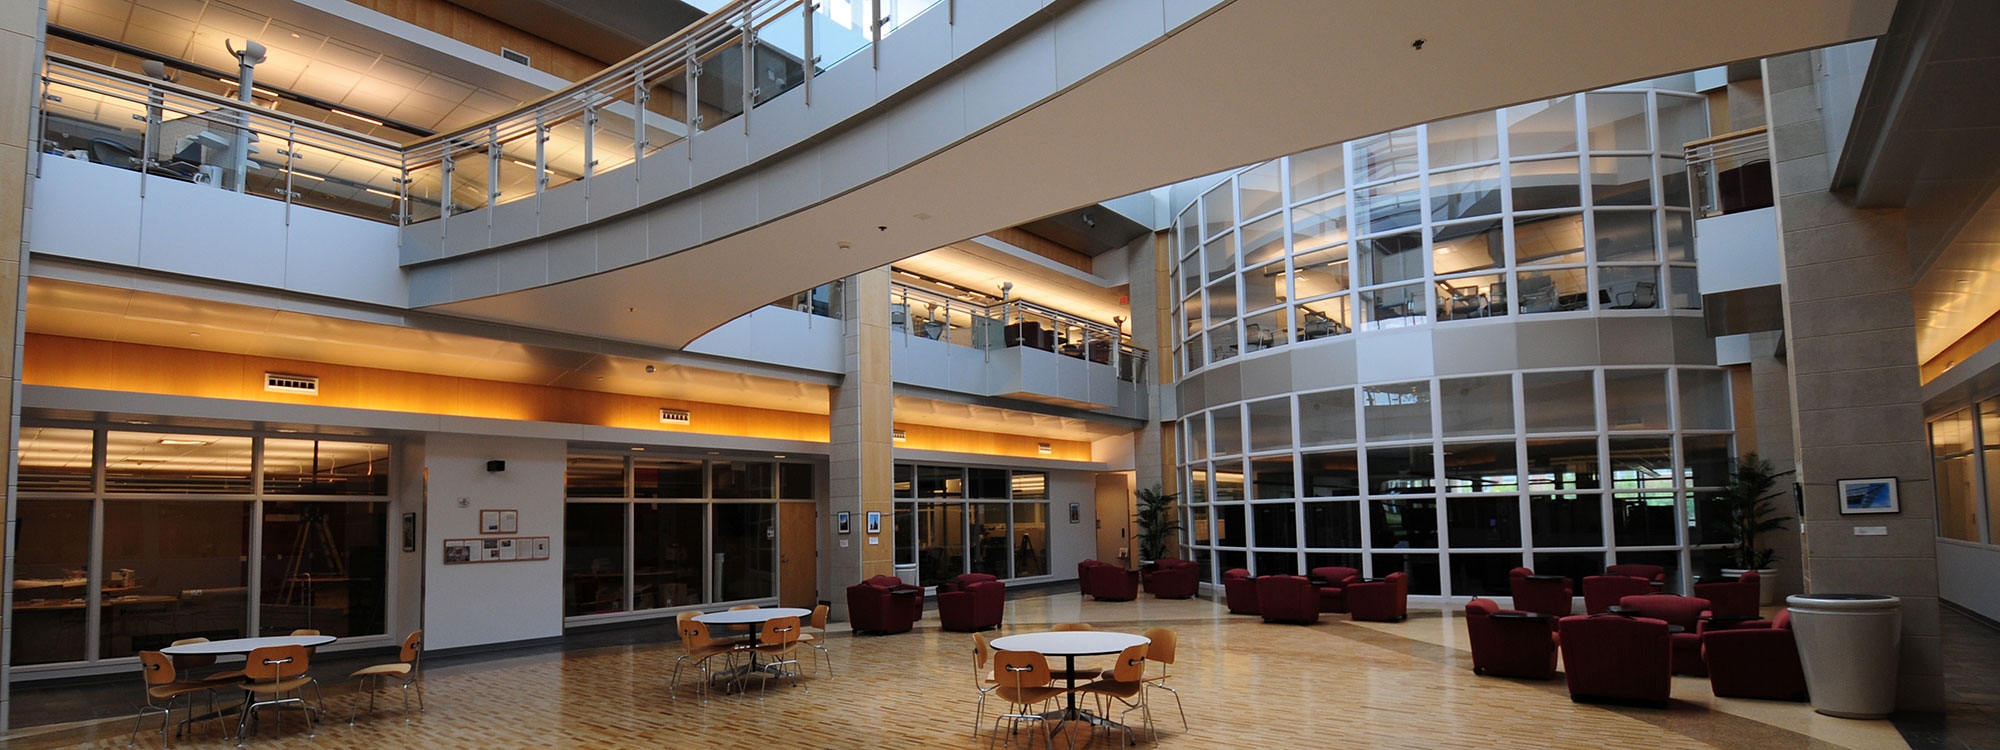 Interior of Stephenson Research center